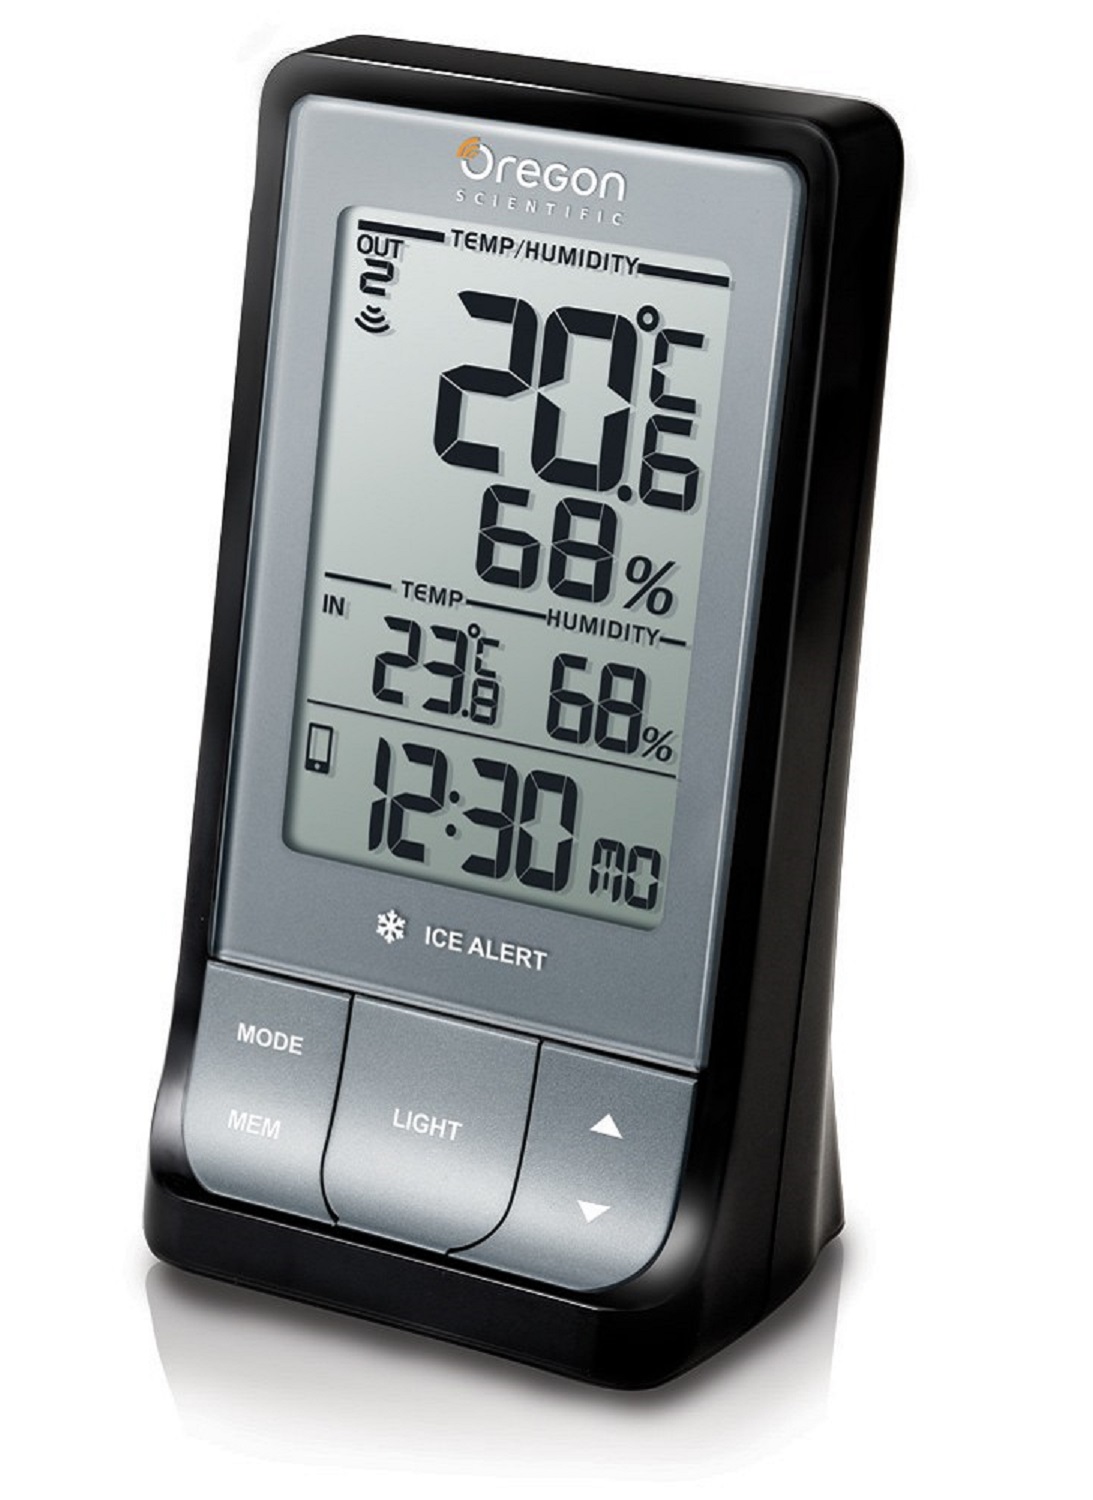 Bresser  Oregon Scientific Weather@Home Wireless Thermometer